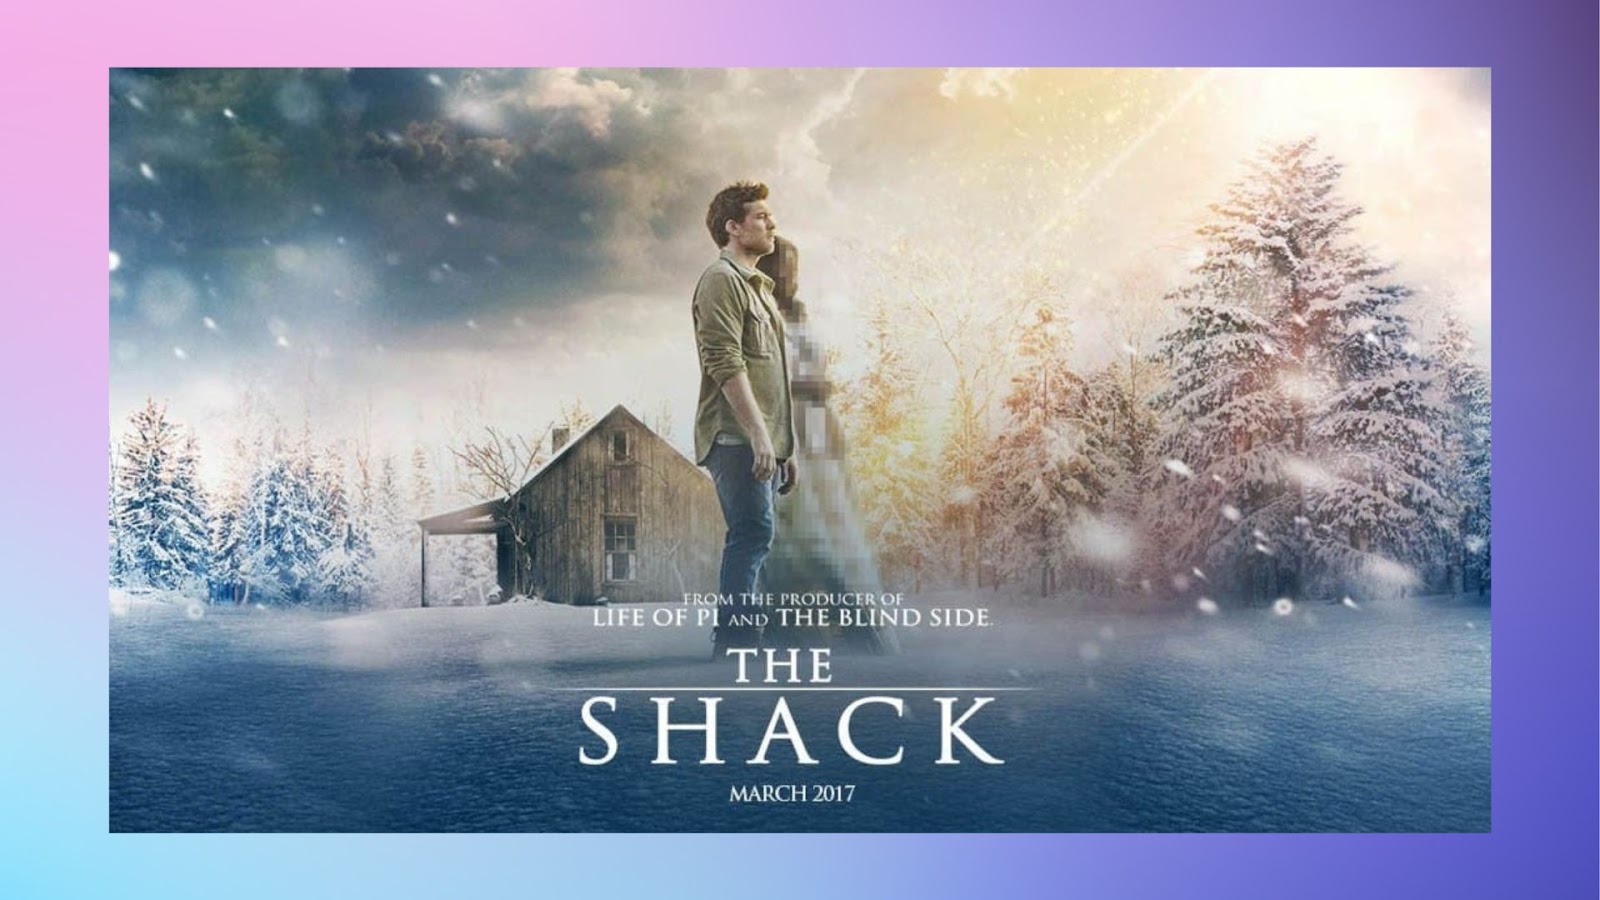 Christian Movies on Hulu - The Shack